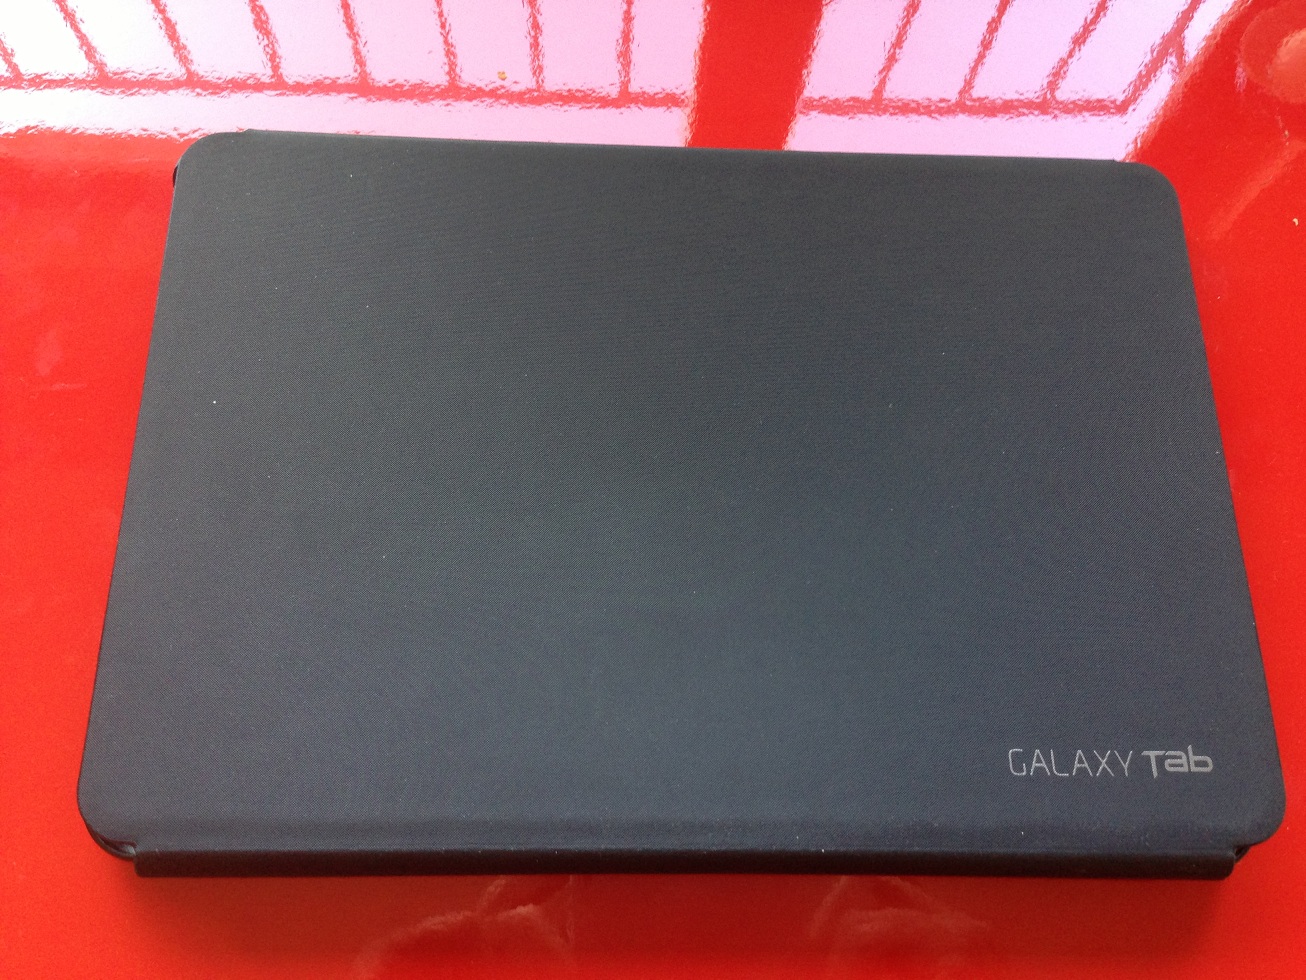  [SATILIK] SAMSUNG GALAXY TAB 10.1 3G-WIFI-DUAL CORE-1280X800 VE ORJiNAL SMART COVER CASE